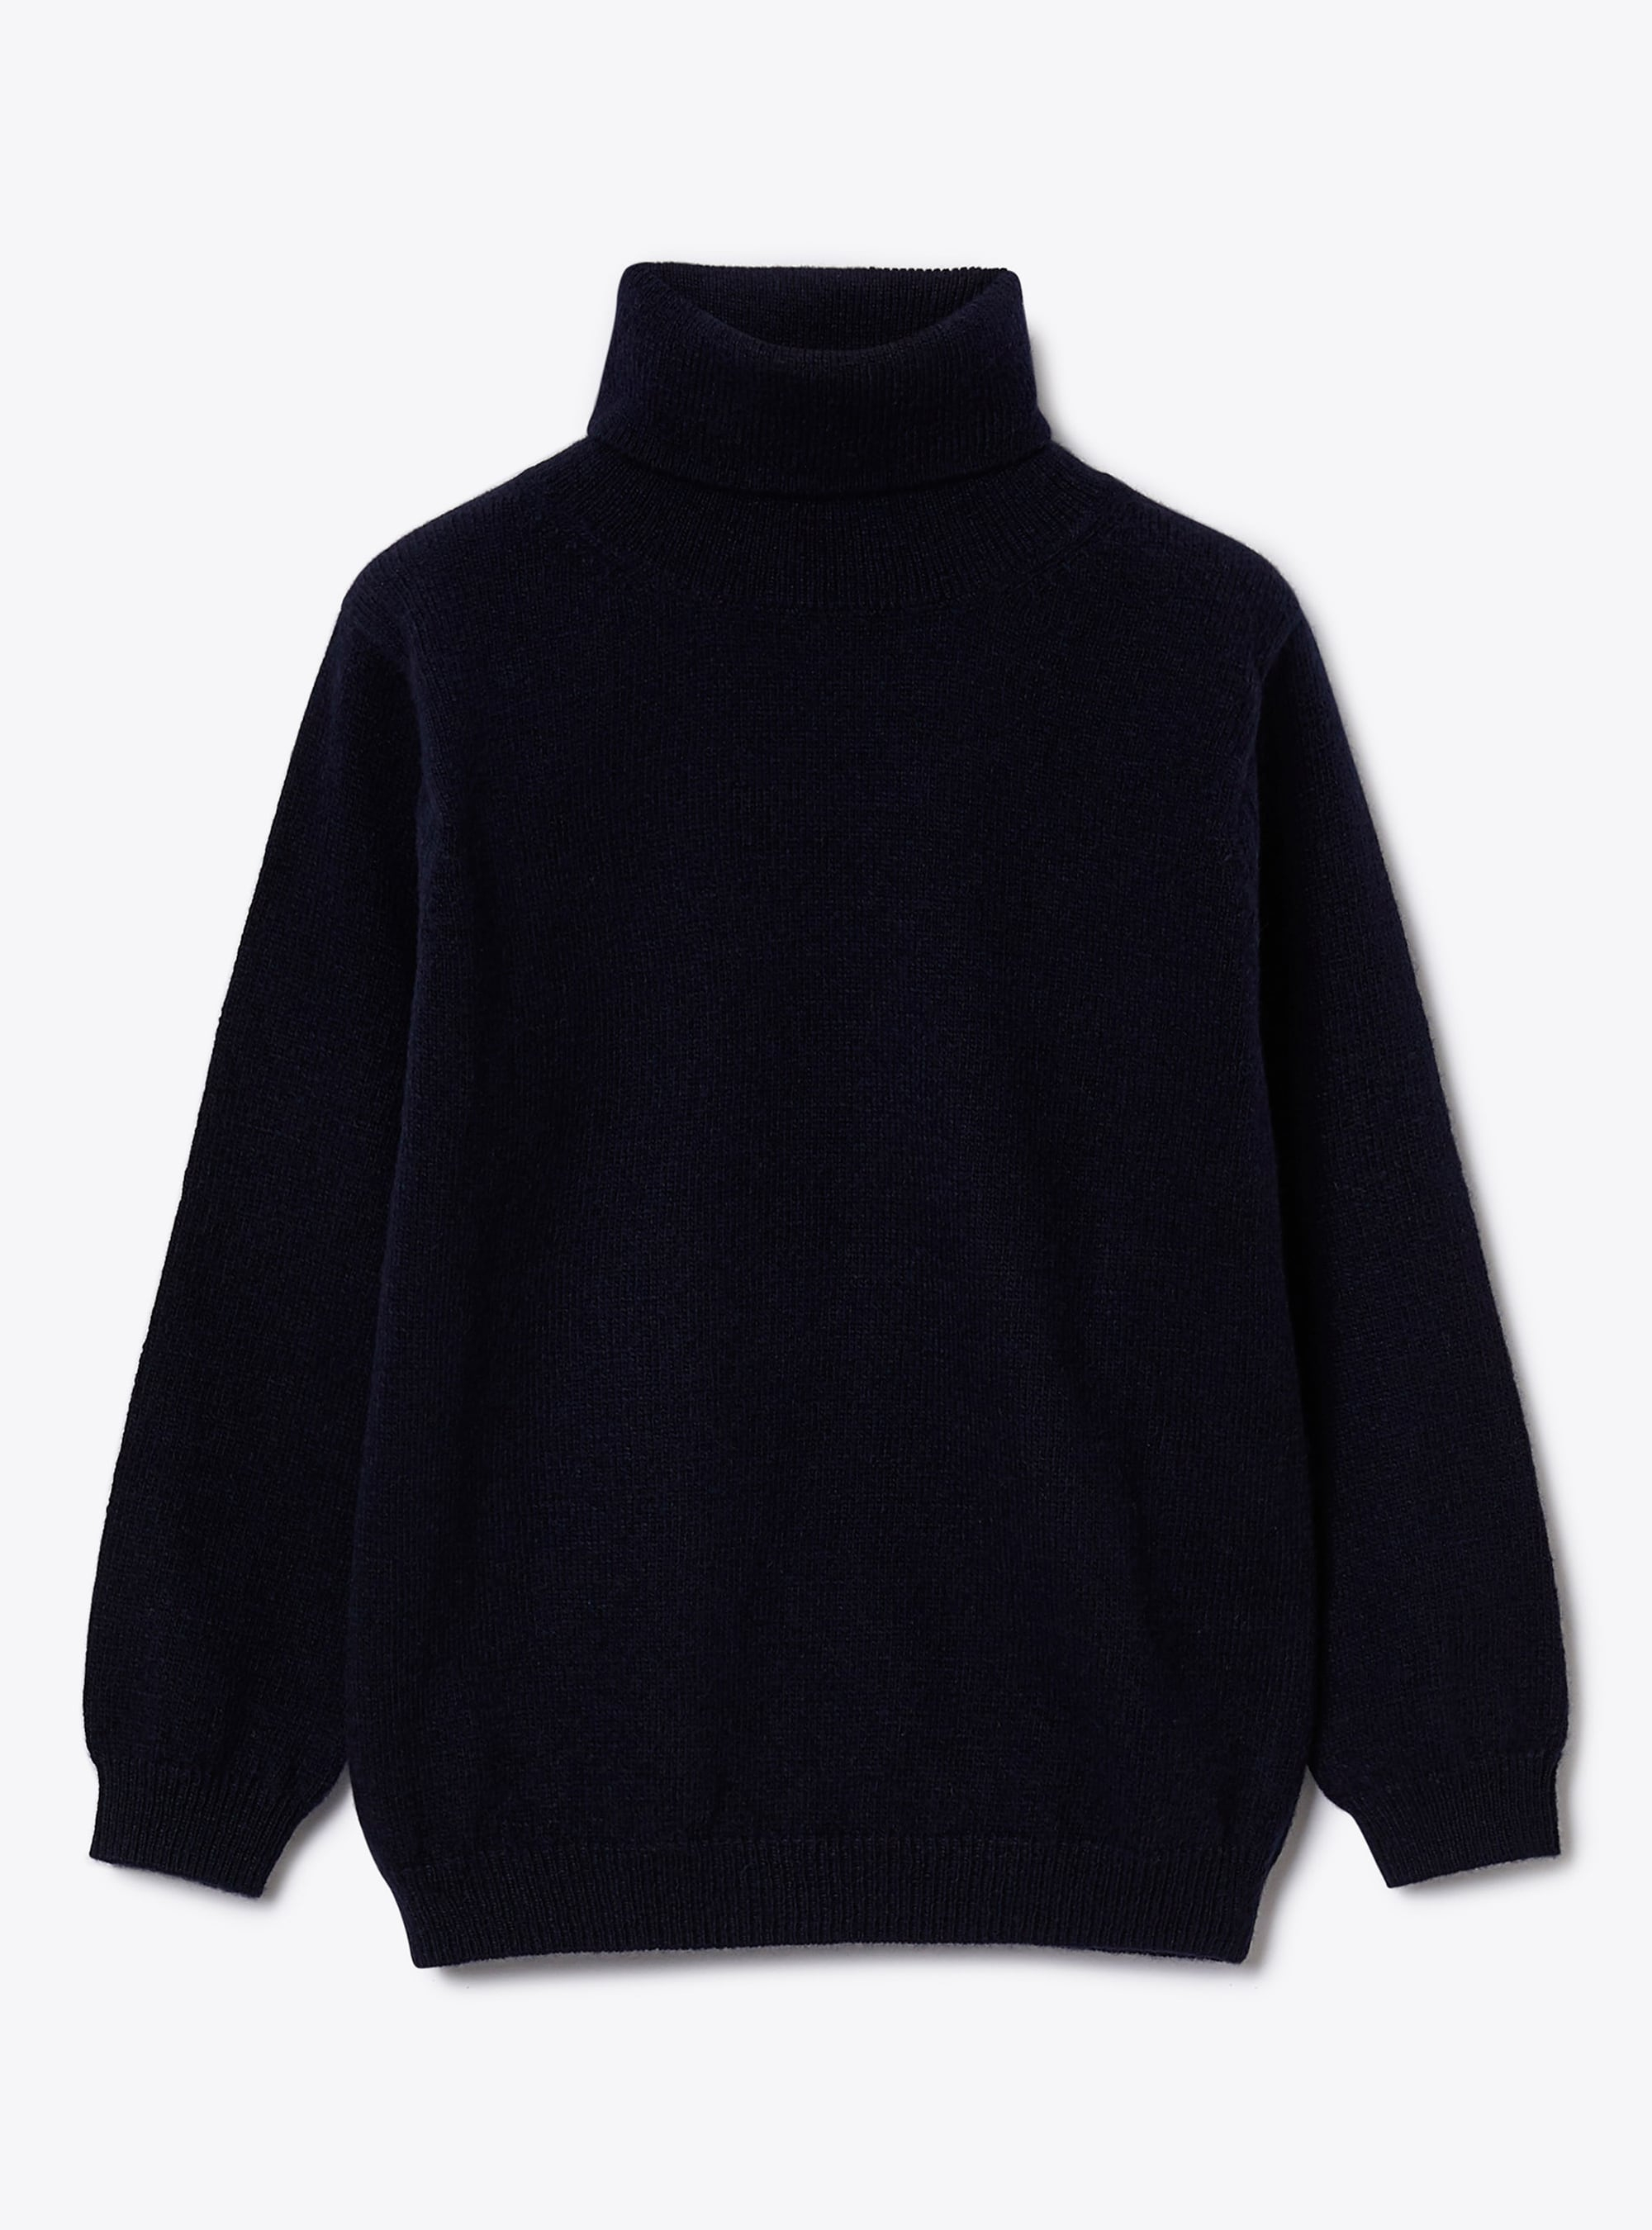 Blue cashmere turtleneck sweater - Sweaters - Il Gufo